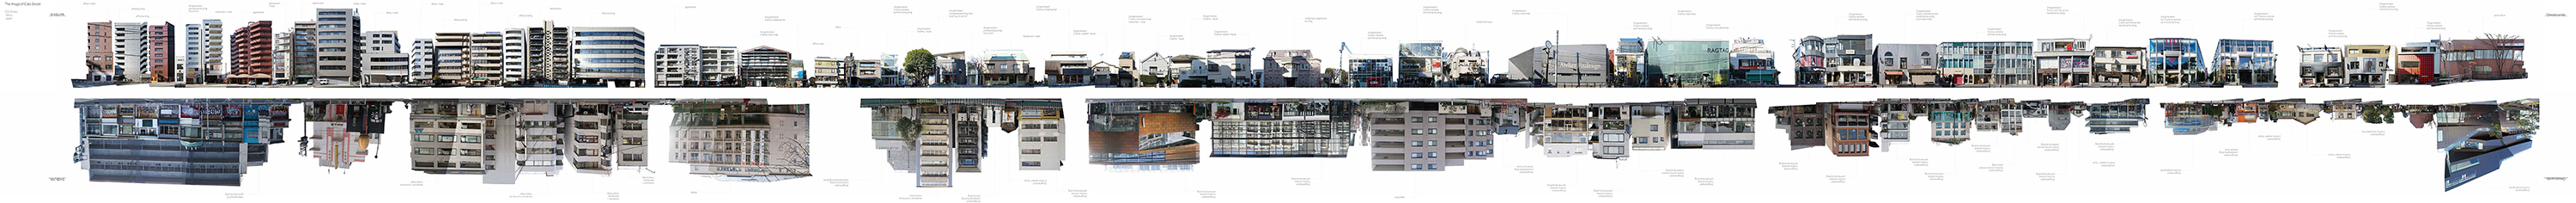 AA School of Architecture 2015 - Hye Rim Lee